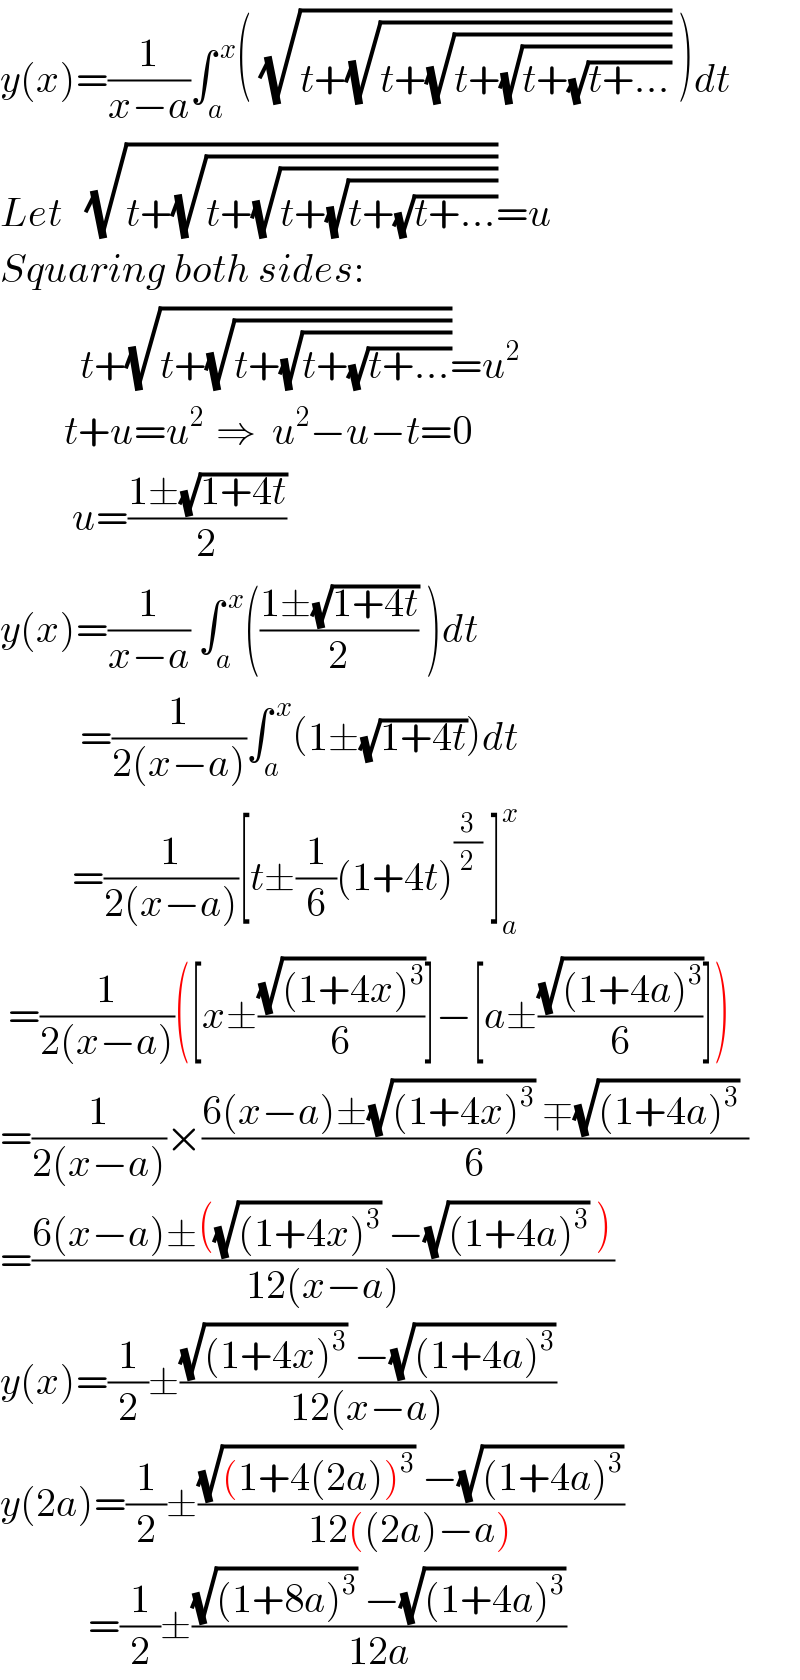 y(x)=(1/(x−a))∫_a ^( x) ( (√(t+(√(t+(√(t+(√(t+(√(t+...)))))))))) )dt  Let   (√(t+(√(t+(√(t+(√(t+(√(t+...))))))))))=u  Squaring both sides:            t+(√(t+(√(t+(√(t+(√(t+...))))))))=u^2           t+u=u^(2   ) ⇒  u^2 −u−t=0           u=((1±(√(1+4t)))/2)  y(x)=(1/(x−a)) ∫_a ^( x) (((1±(√(1+4t)))/2) )dt            =(1/(2(x−a)))∫_a ^( x) (1±(√(1+4t)))dt           =(1/(2(x−a)))[t±(1/6)(1+4t)^(3/2)  ]_a ^x    =(1/(2(x−a)))([x±((√((1+4x)^3 ))/6)]−[a±((√((1+4a)^3 ))/6)])  =(1/(2(x−a)))×((6(x−a)±(√((1+4x)^3 )) ∓(√((1+4a)^3 )) )/6)  =((6(x−a)±((√((1+4x)^3 )) −(√((1+4a)^3 )) ))/(12(x−a)))  y(x)=(1/2)±(((√((1+4x)^3 )) −(√((1+4a)^3 )))/(12(x−a)))  y(2a)=(1/2)±(((√((1+4(2a))^3 )) −(√((1+4a)^3 )))/(12((2a)−a)))             =(1/2)±(((√((1+8a)^3 )) −(√((1+4a)^3 )))/(12a))  